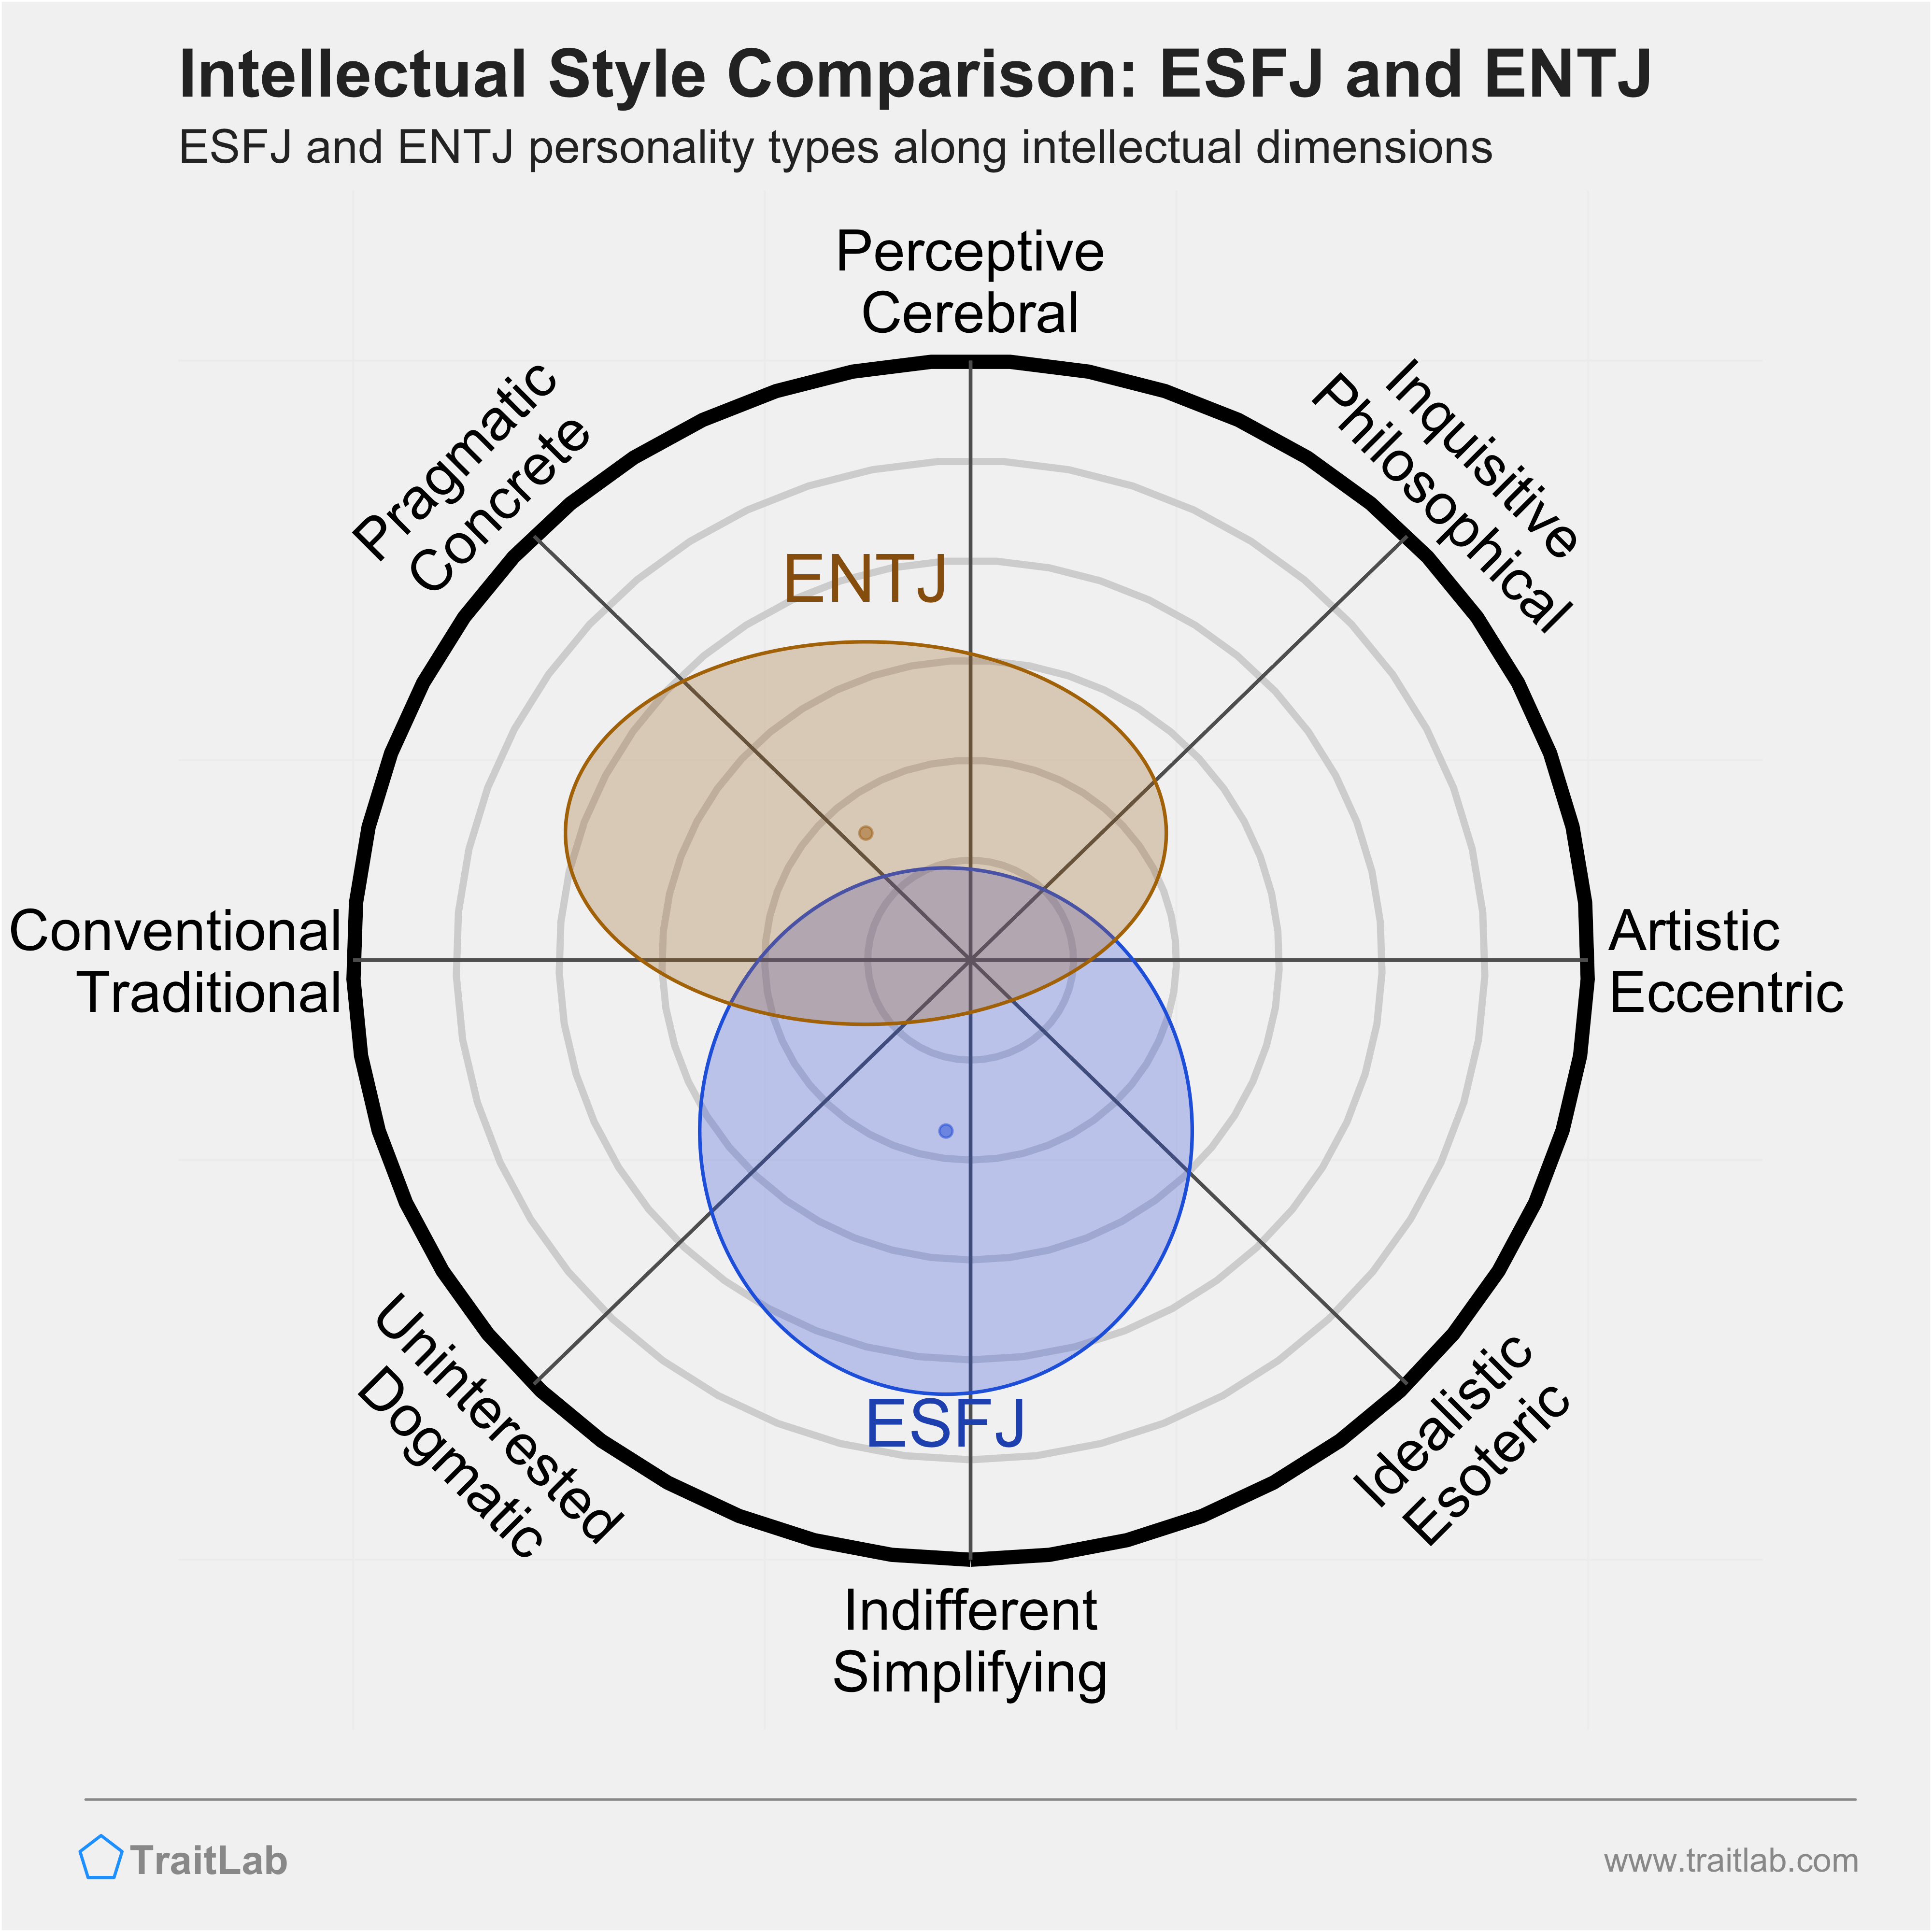 ESFJ and ENTJ comparison across intellectual dimensions